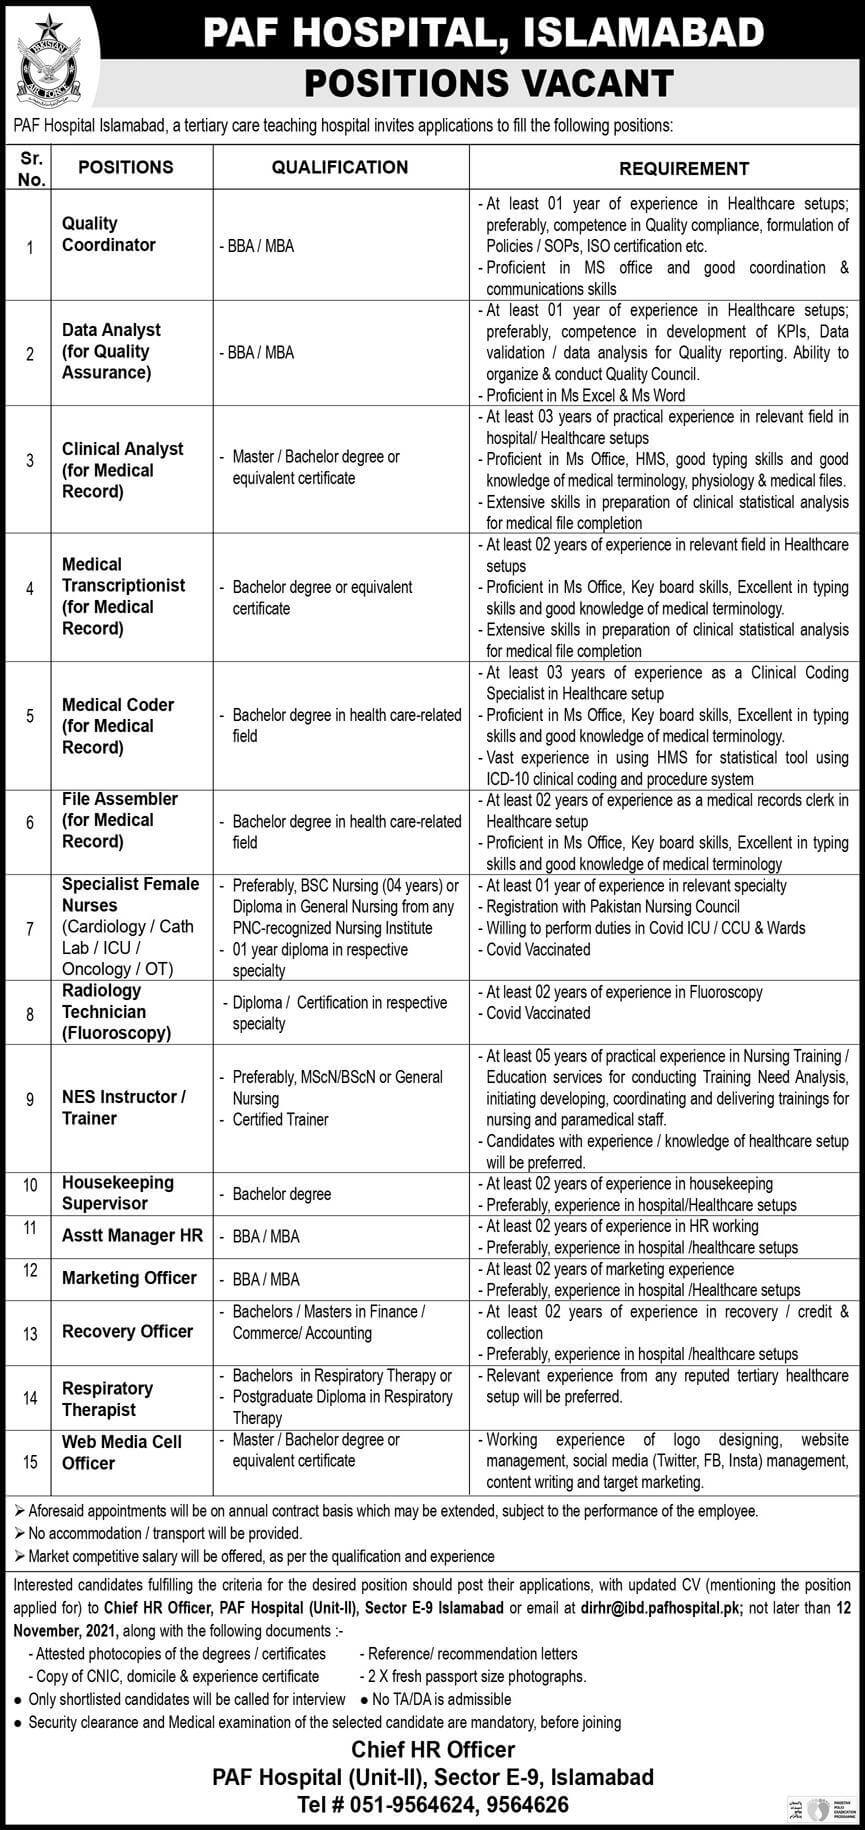 PAF Hospital Jobs in Islamabad Nov 2021